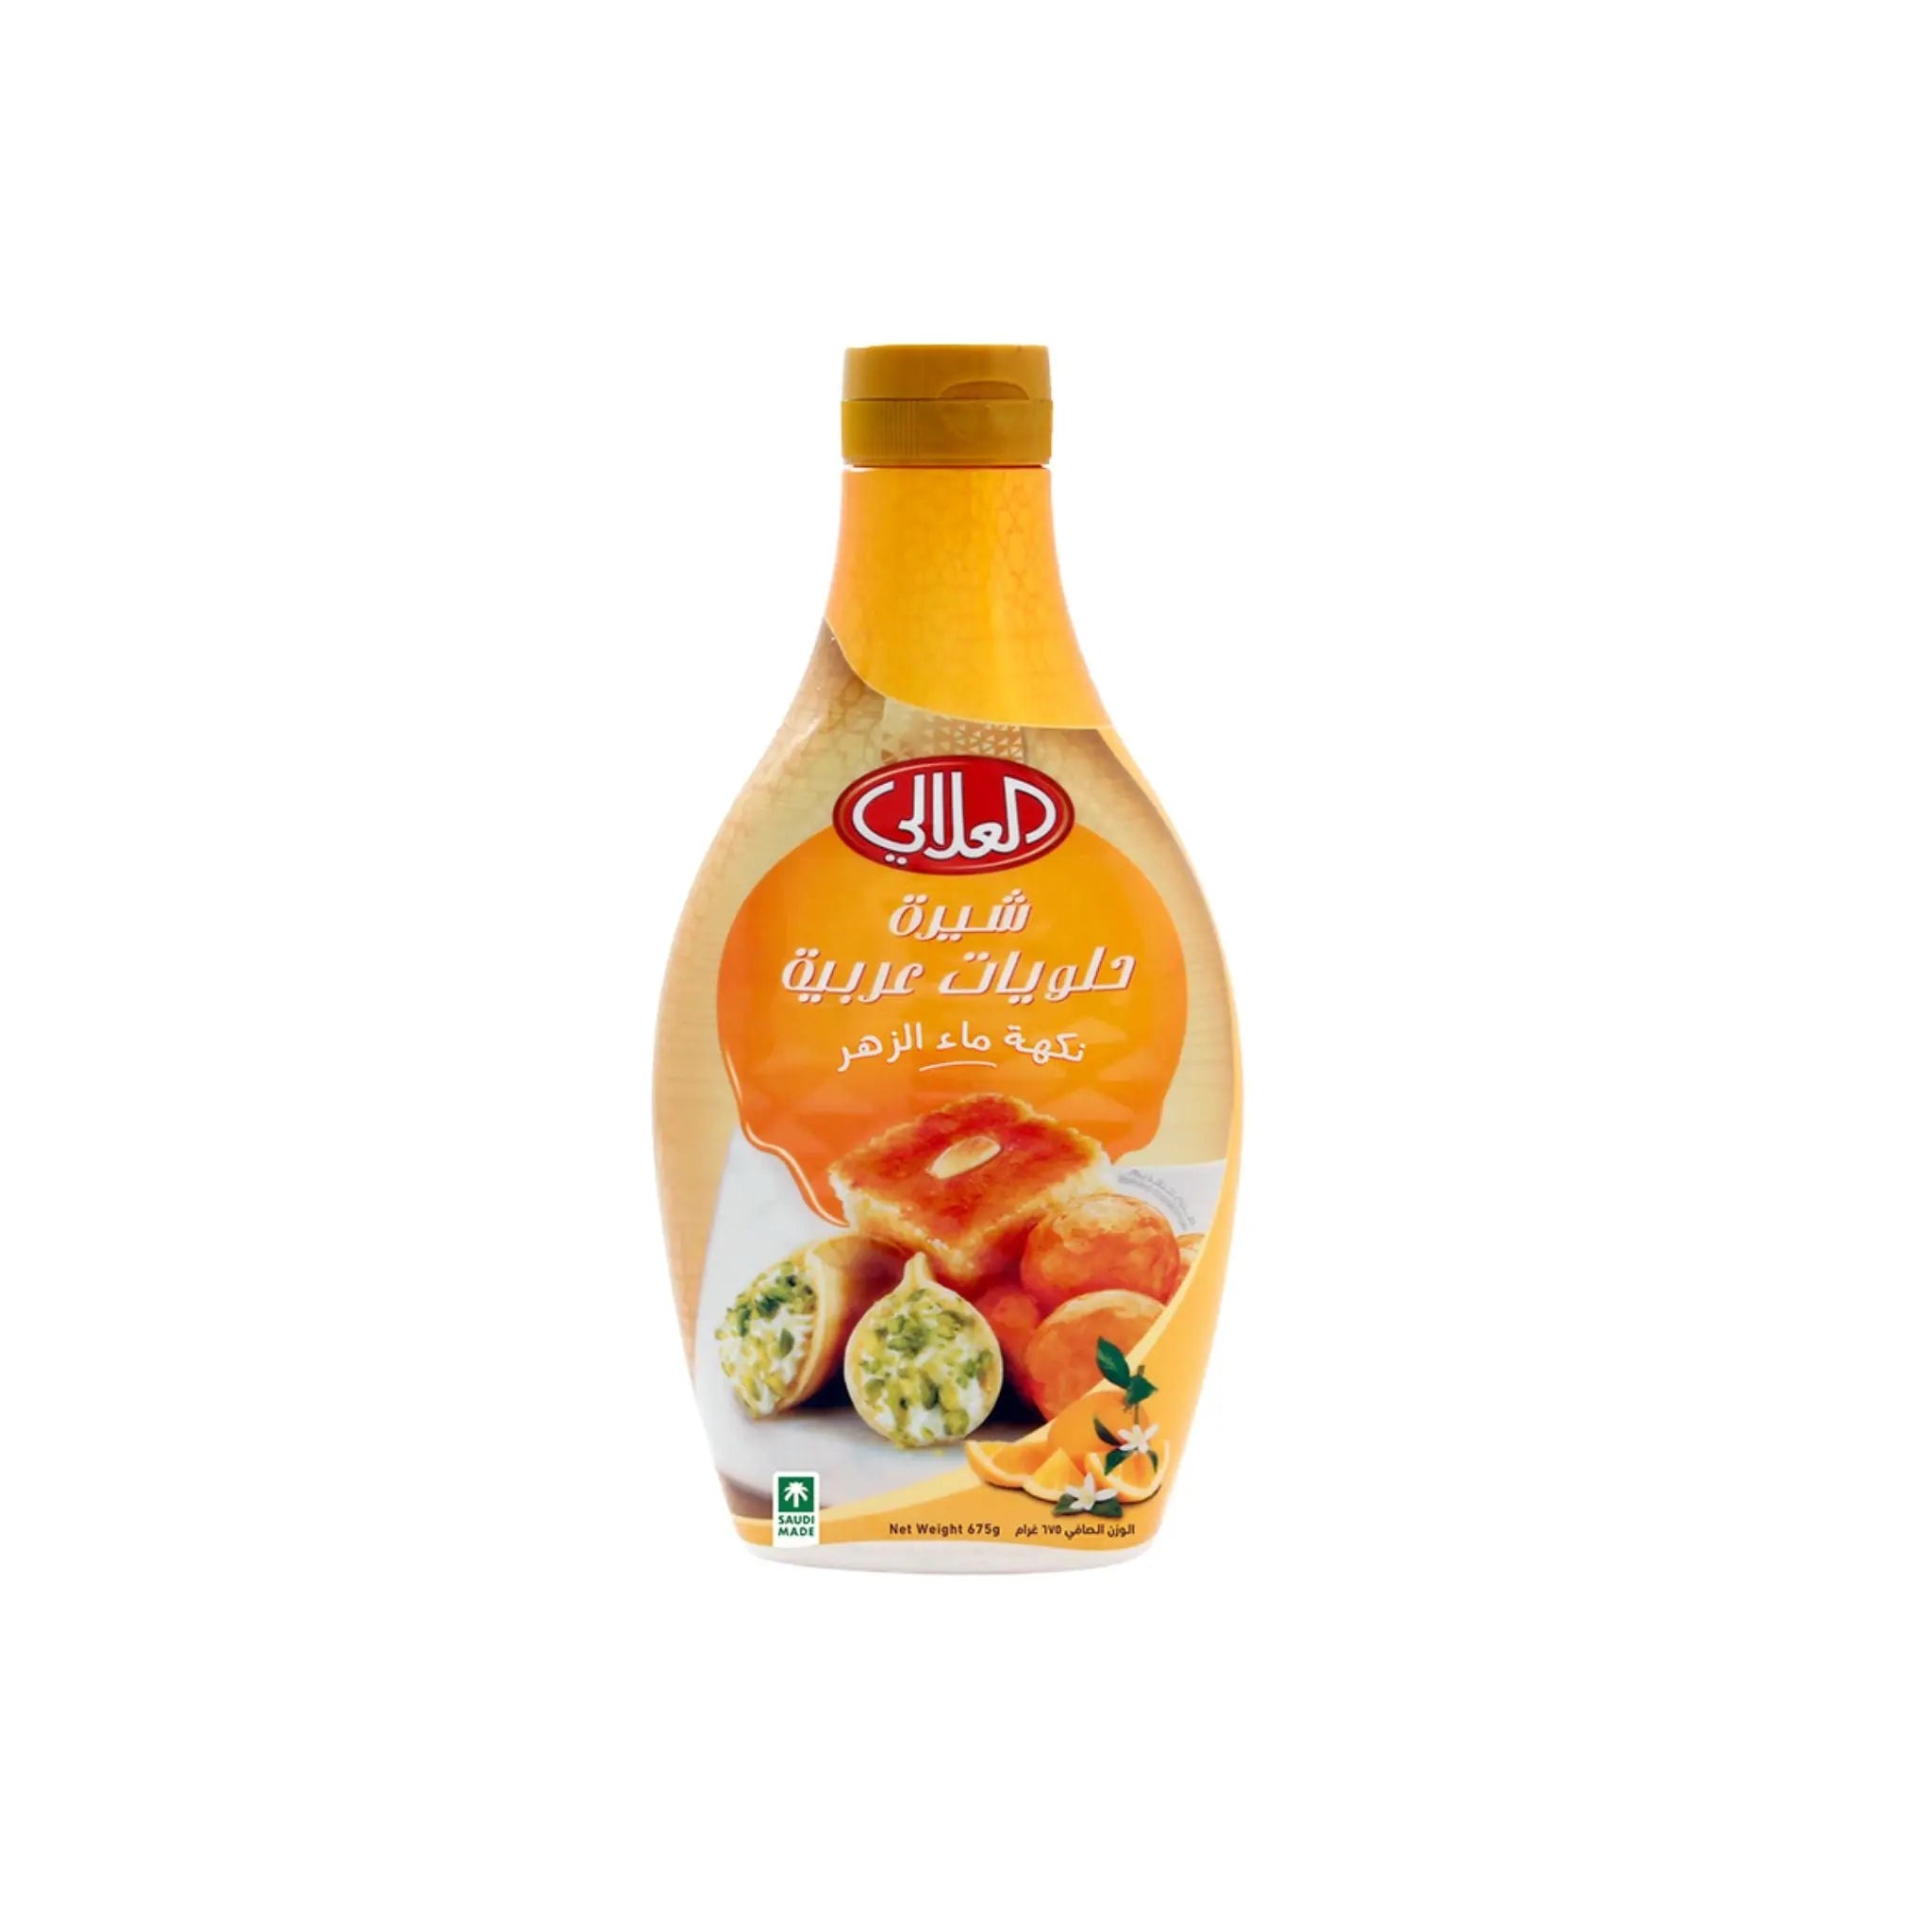 Al Alali Arabic Dessert Syrup with Orange Blossom - 12x675g (1 Carton) - Marino.AE